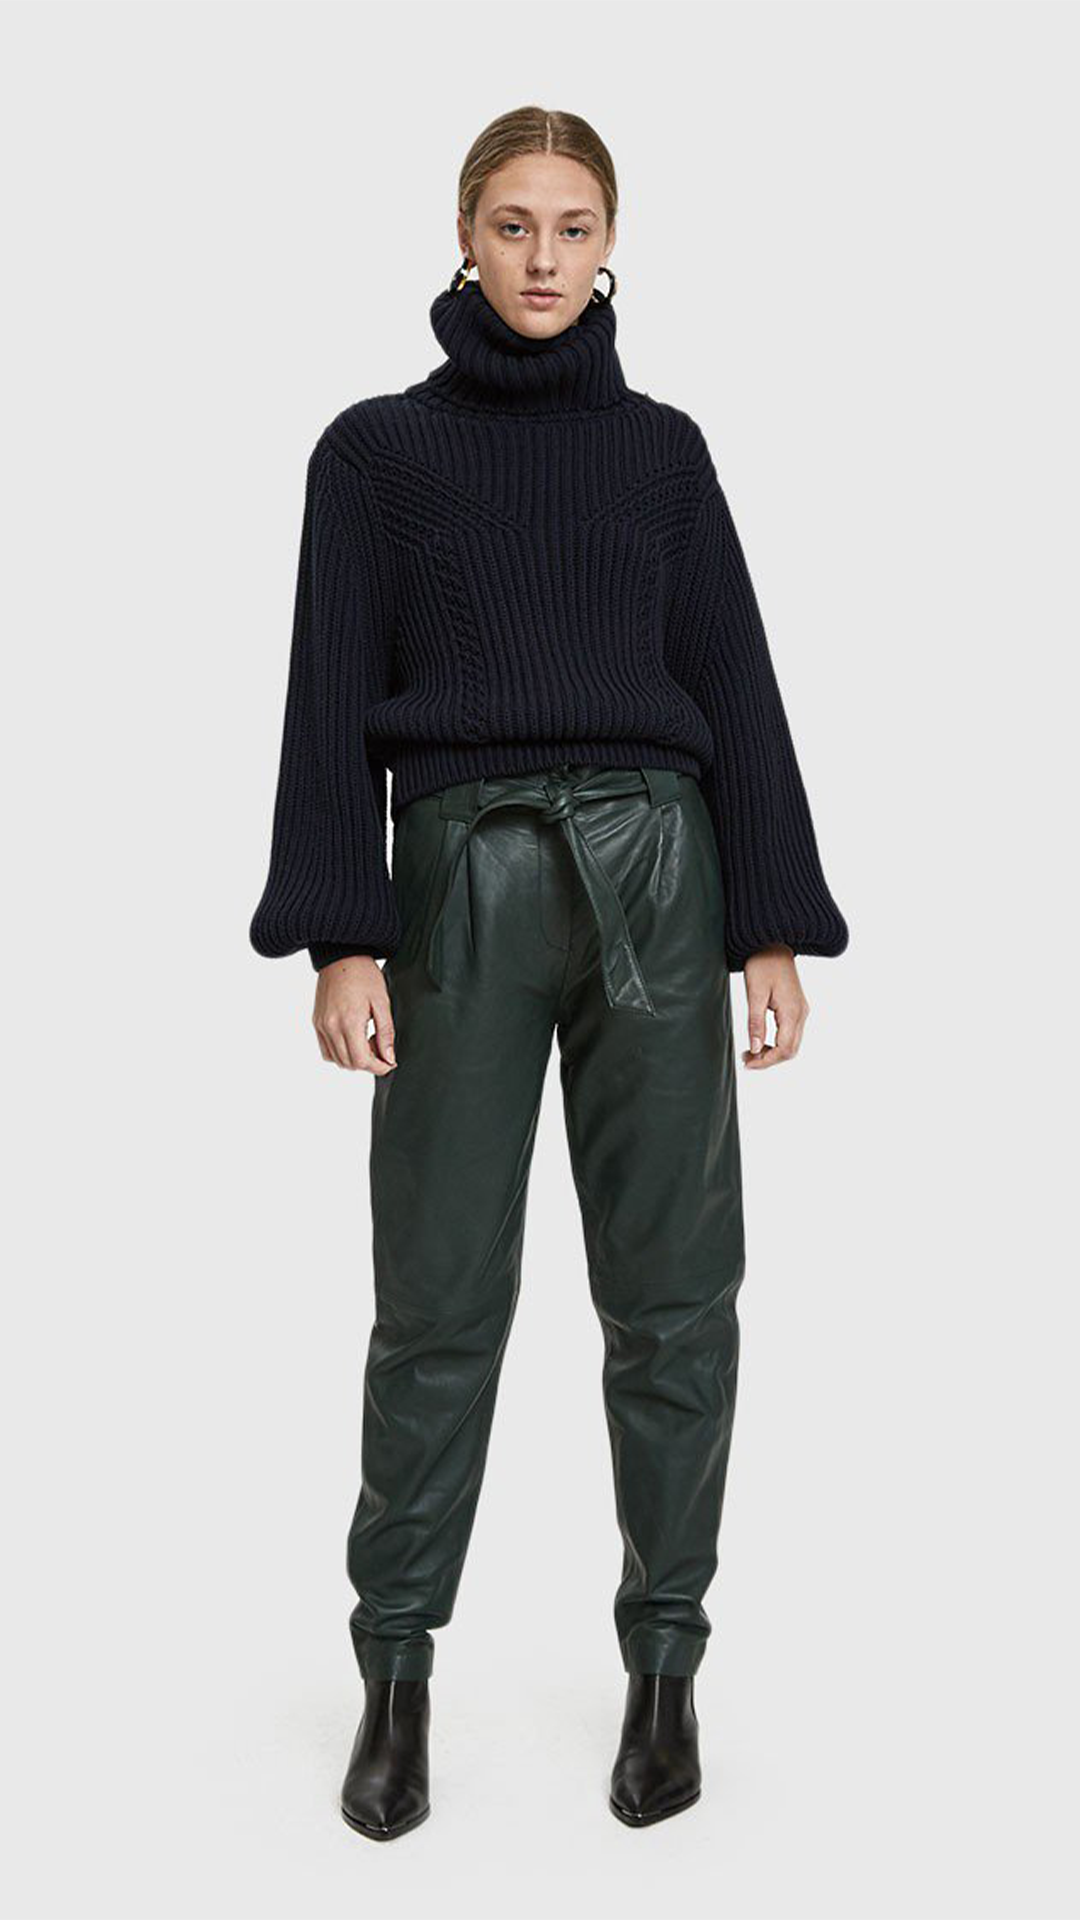 Sago Leather Pants, $260